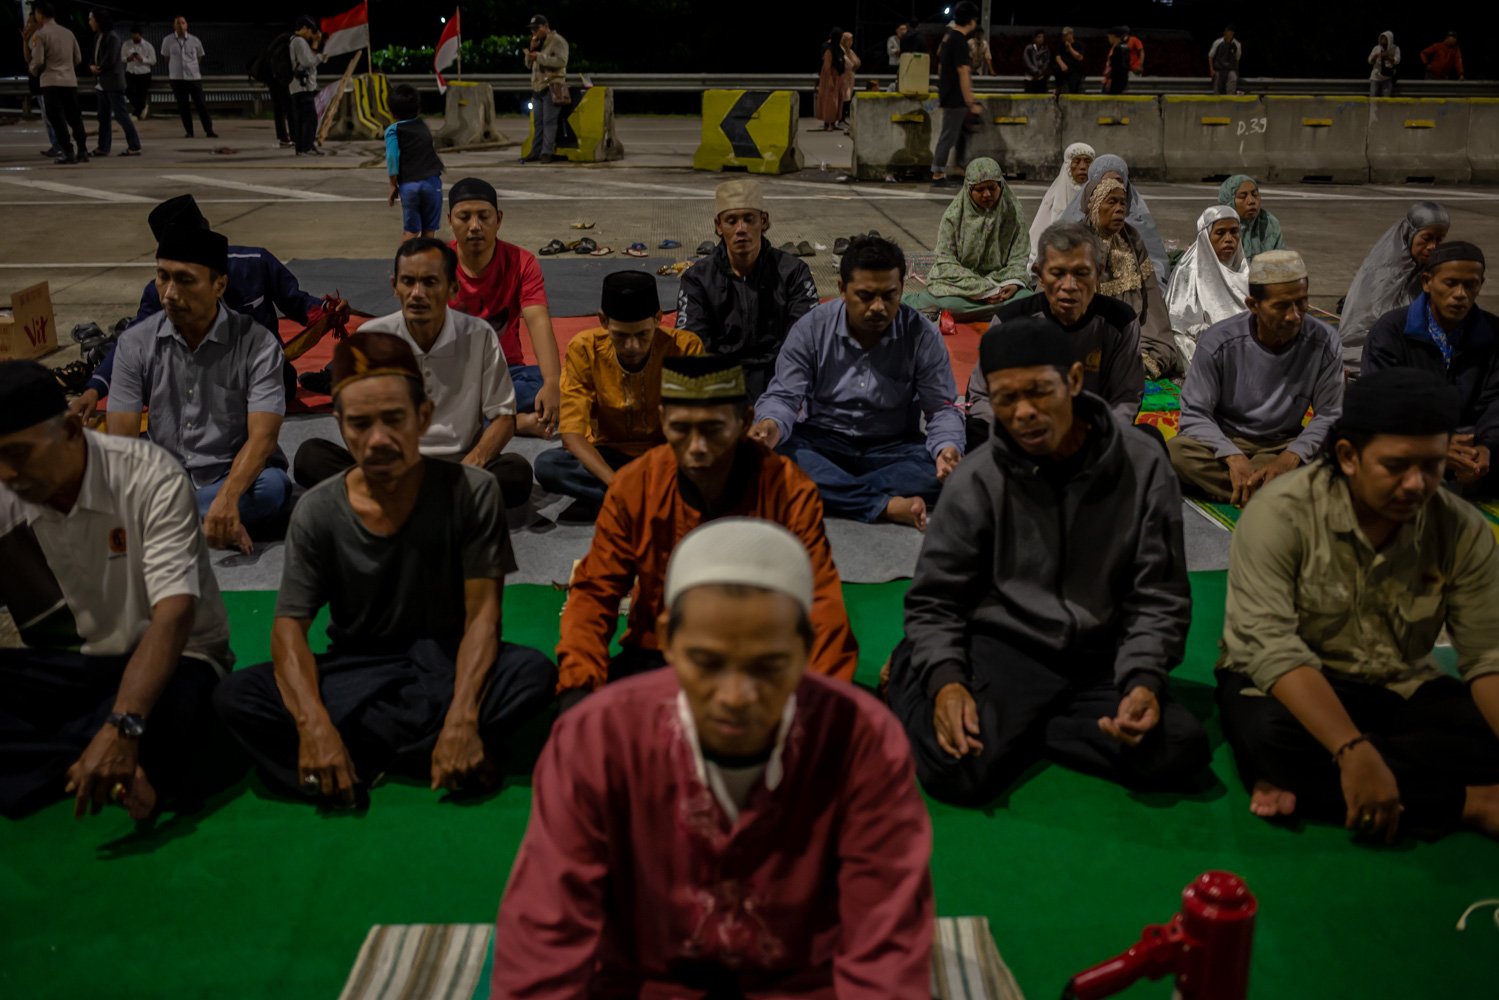 Sejumlah warga ahli waris melaksanakan Shalat Tarawih saat aksi penutupan Jalan Tol Jatikarya di Bekasi, Jawa Barat, Senin (10/4). Aksi penutupan jalan dari pukul 14.50 WIB tersebut menuntut pembayaran konsinyasi dari BPN (Badan Pertanahan Nasional) atas penggunaan tanah seluas 4,2 hektare untuk Tol Cimanggis-Cibitung di Jatikarya.